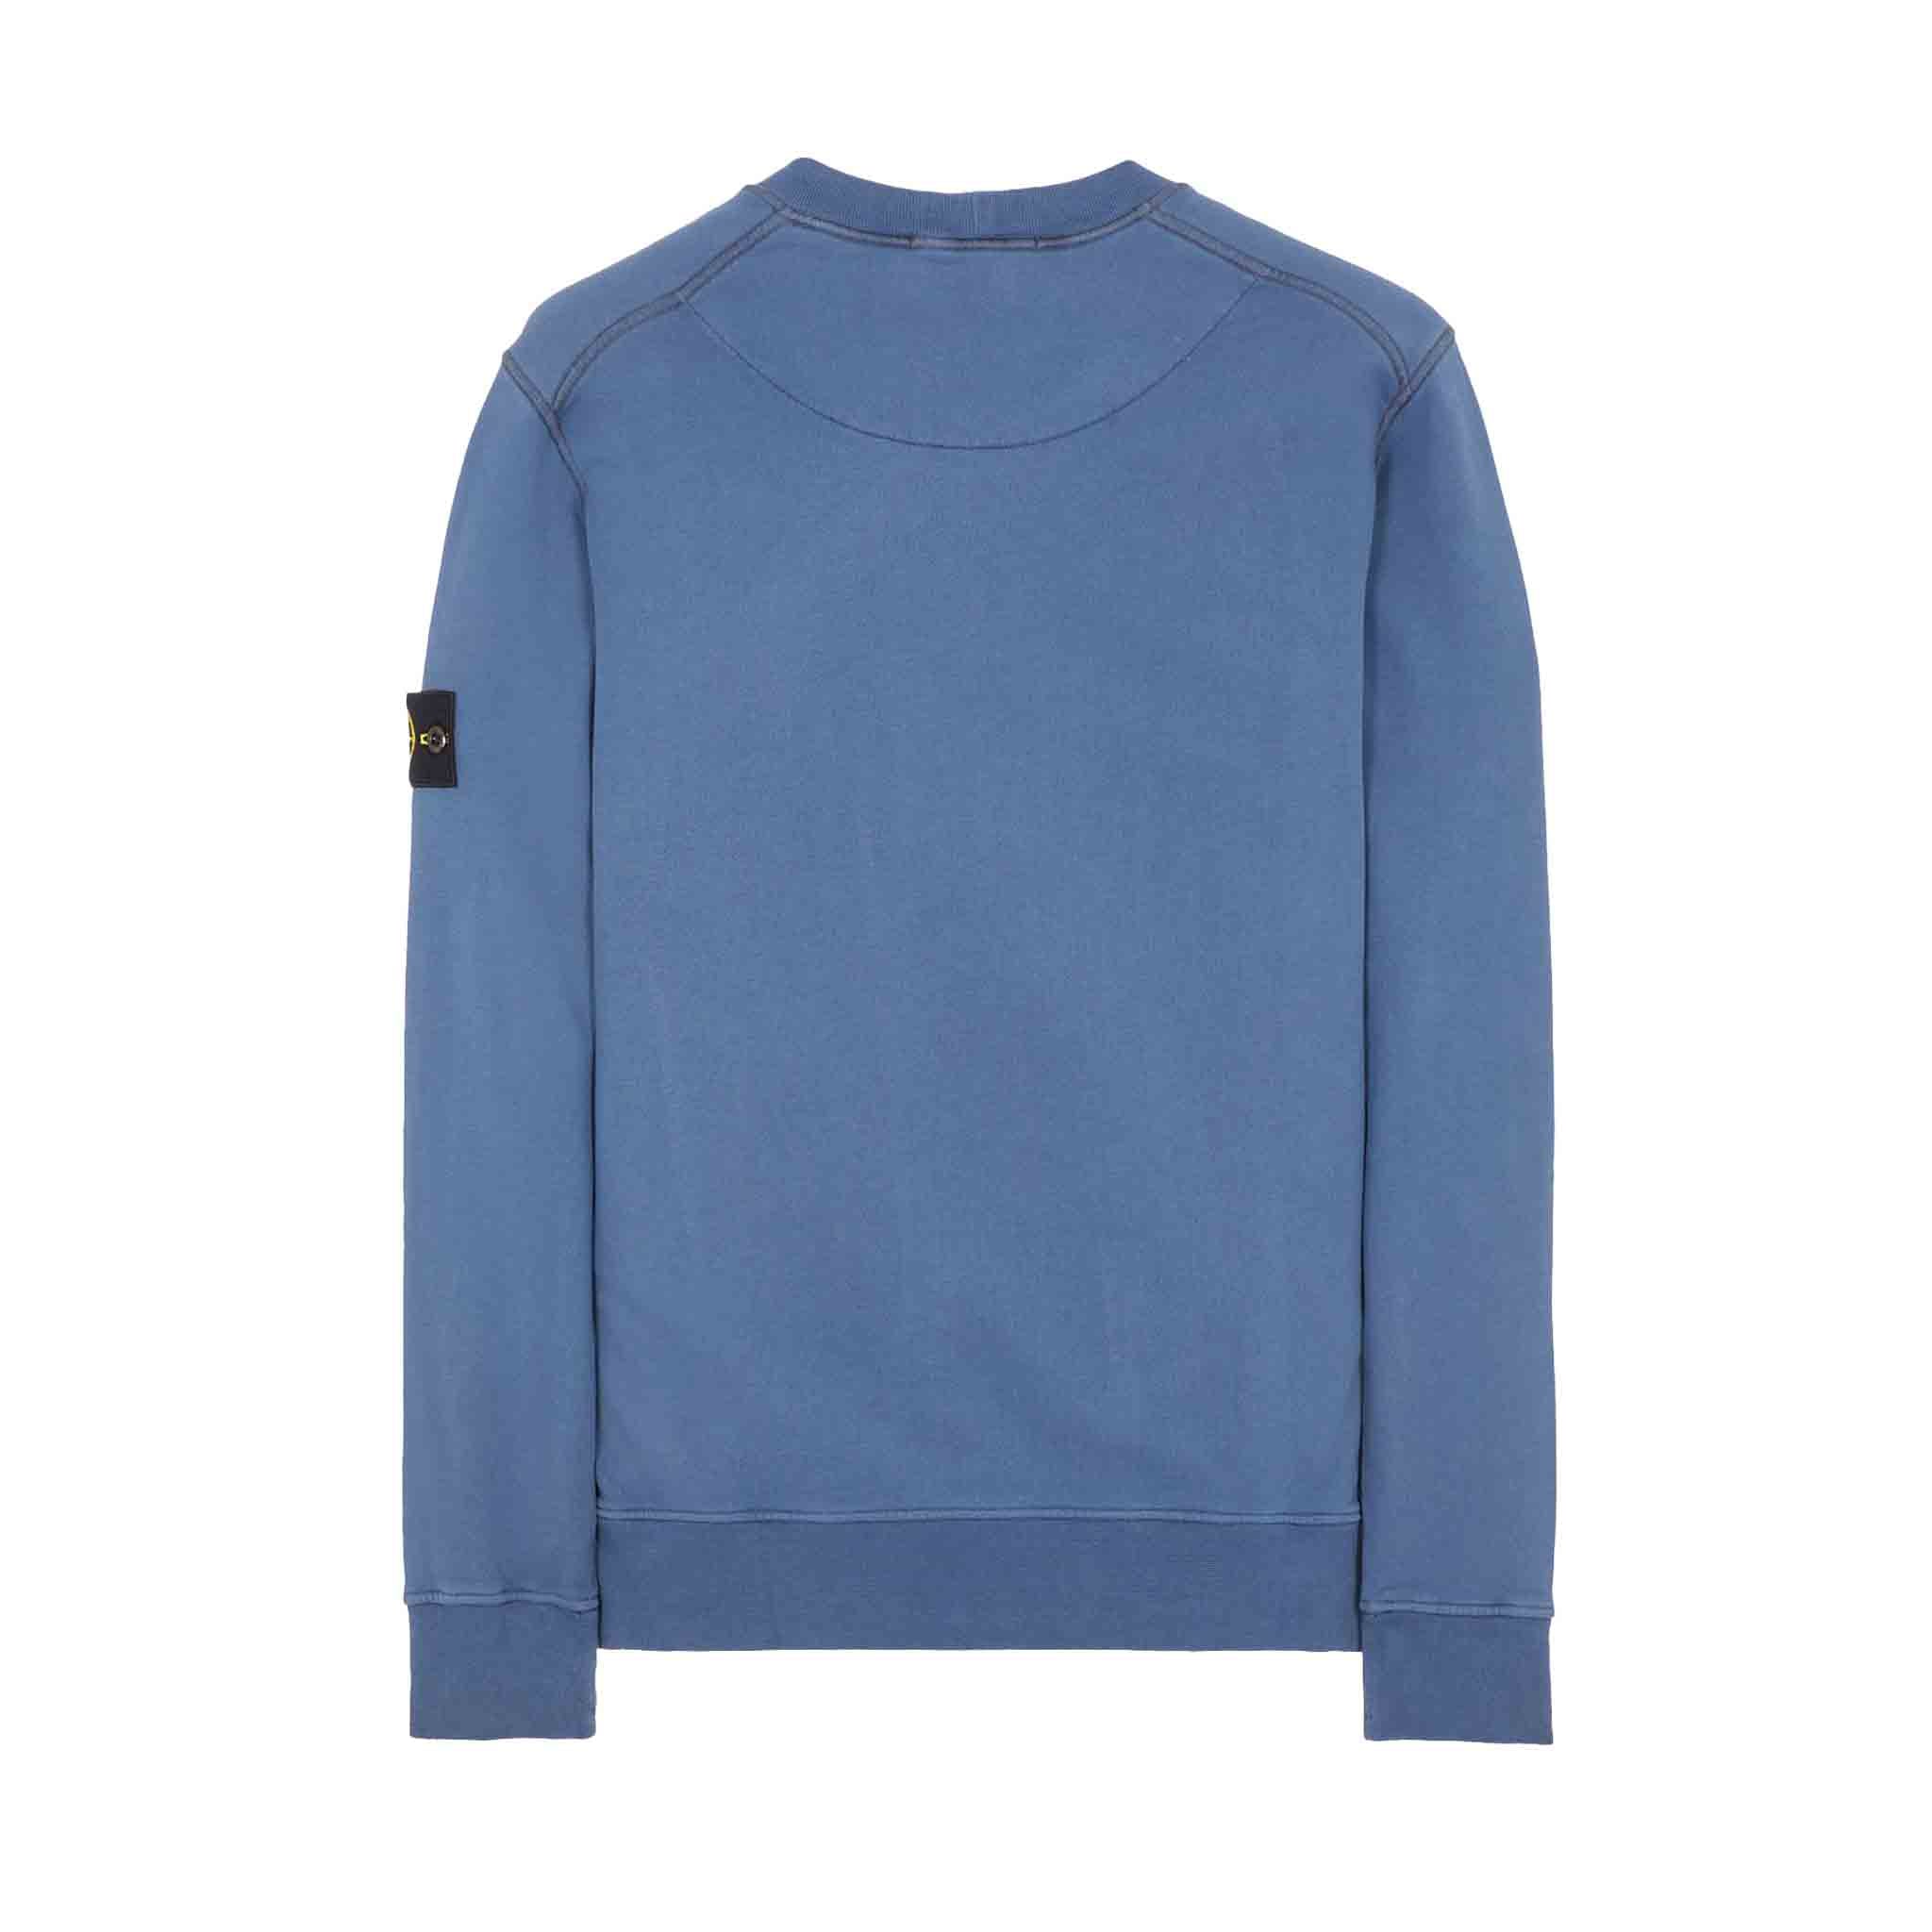 Stone Island Garment Dyed Crewneck Sweatshirt in Avio Blue